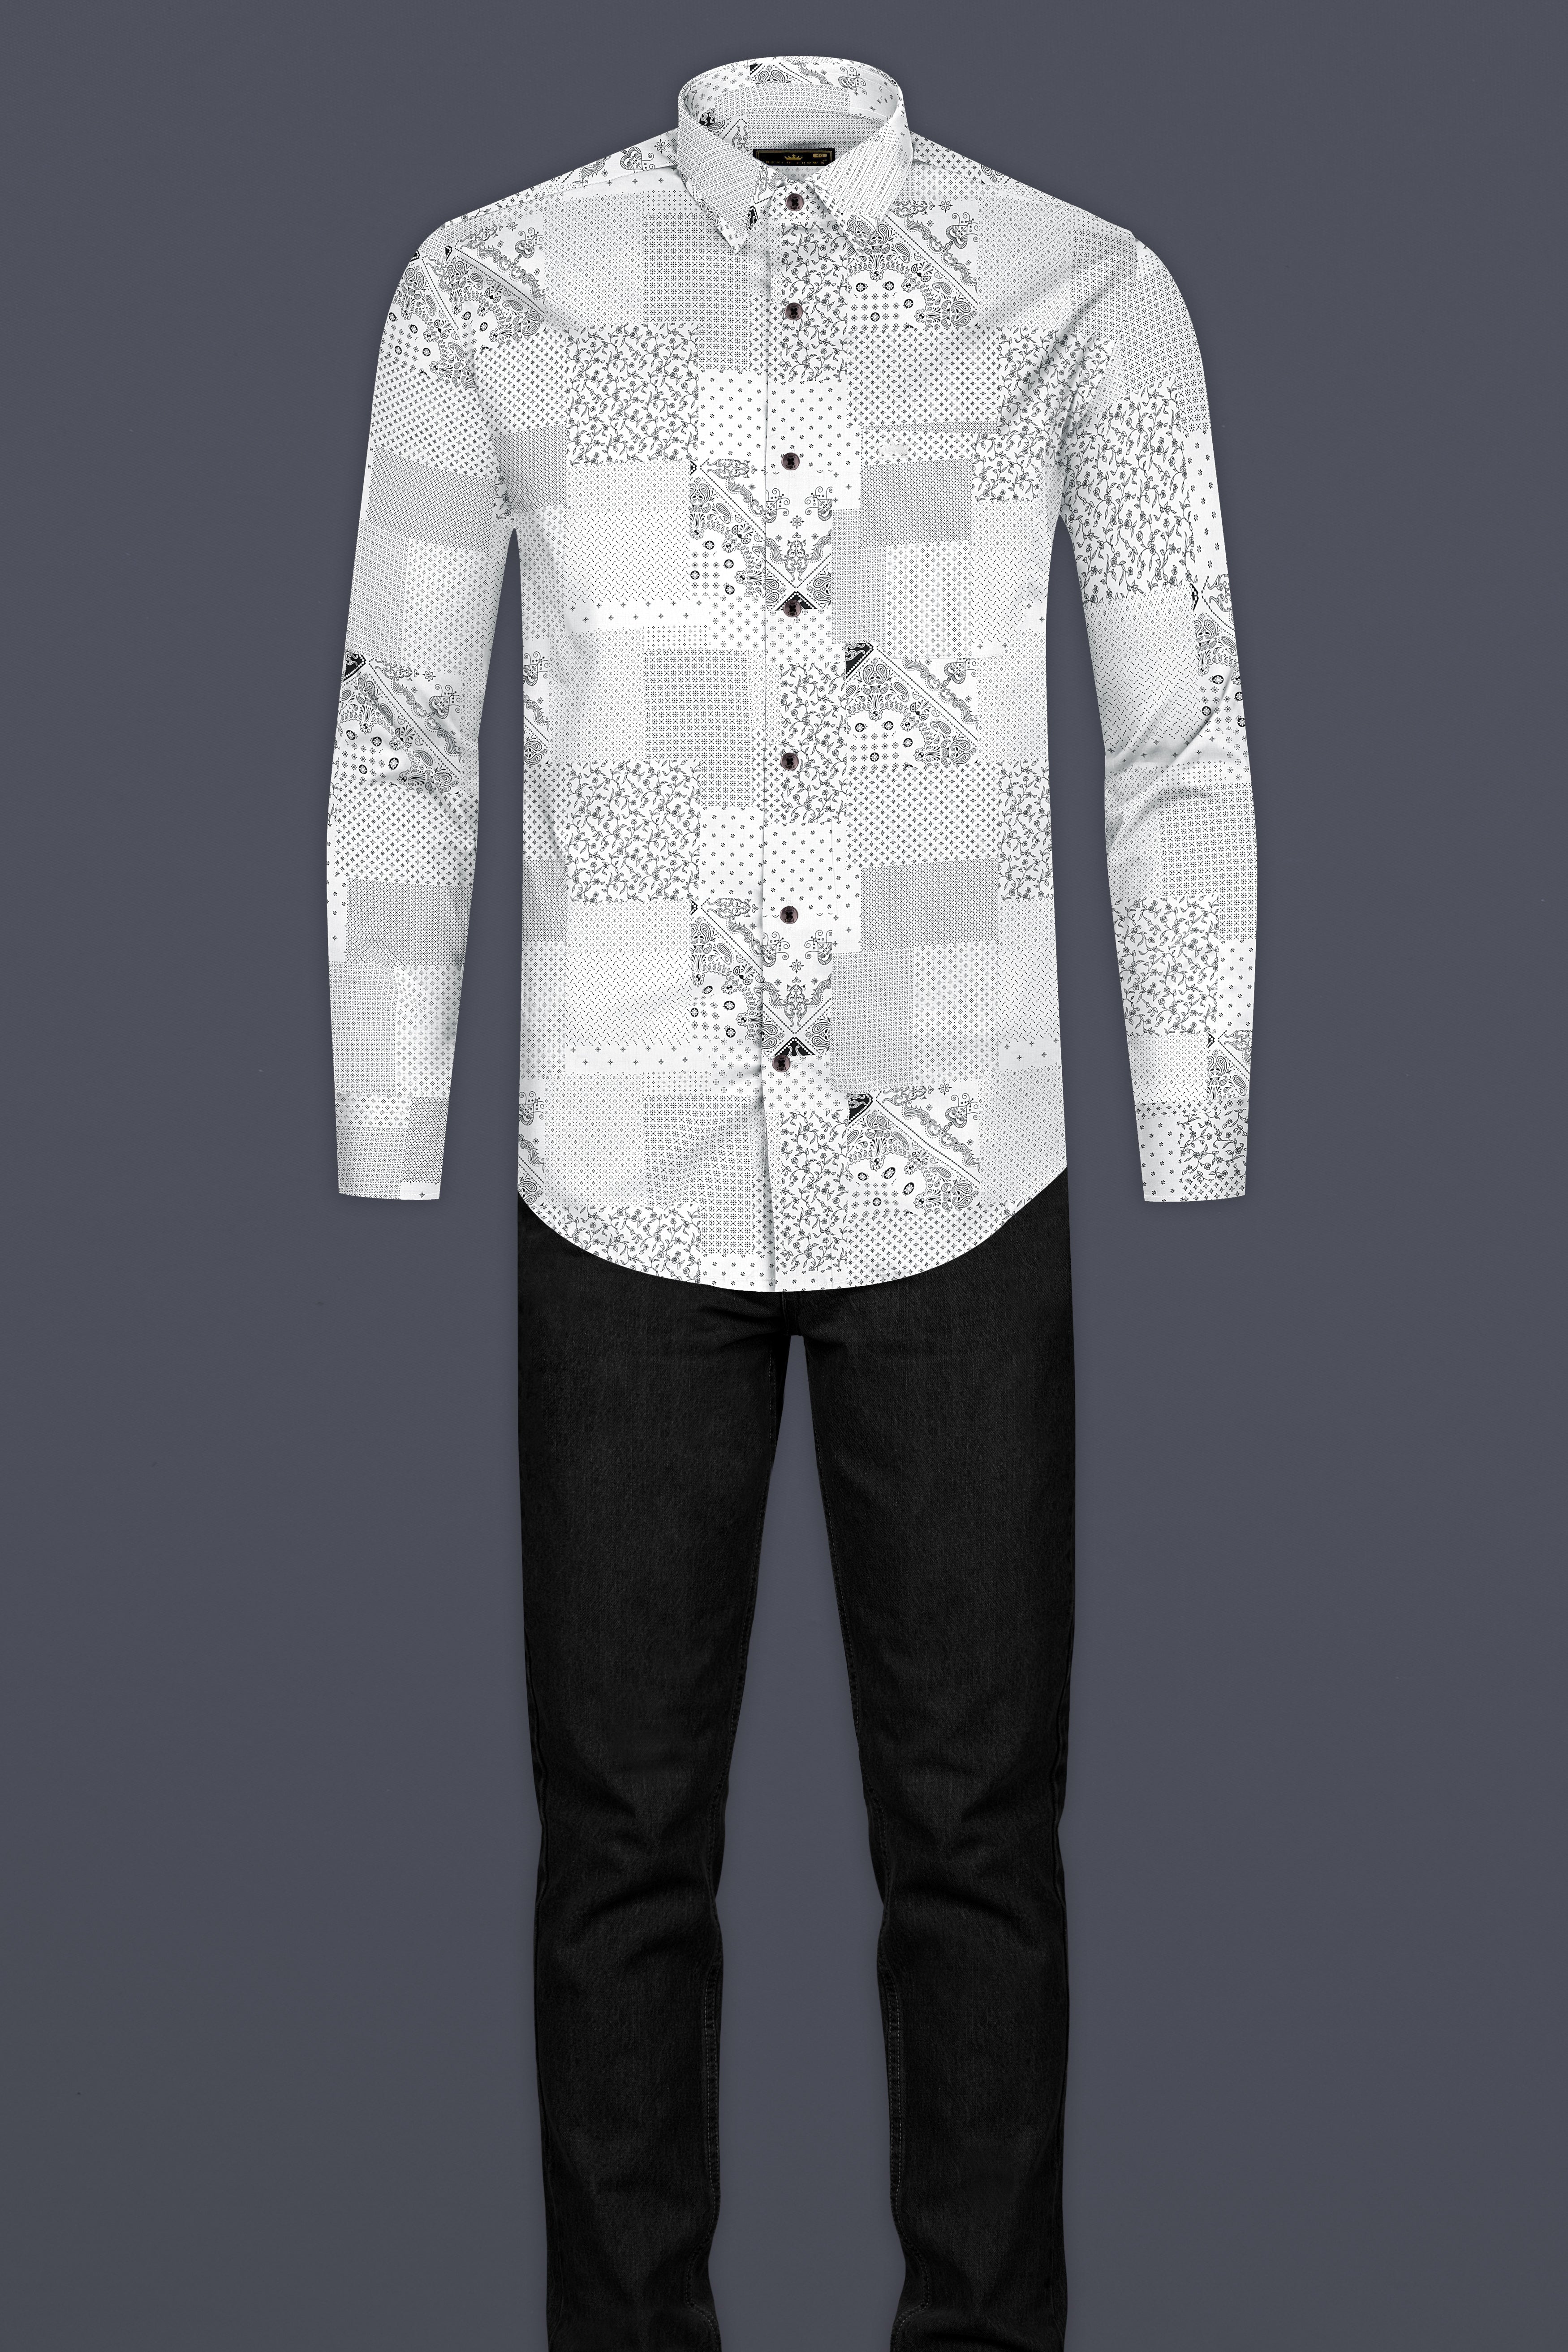 Bright White Square Shaped Paisleys and Flowers Printed Super Soft Premium Cotton Shirt